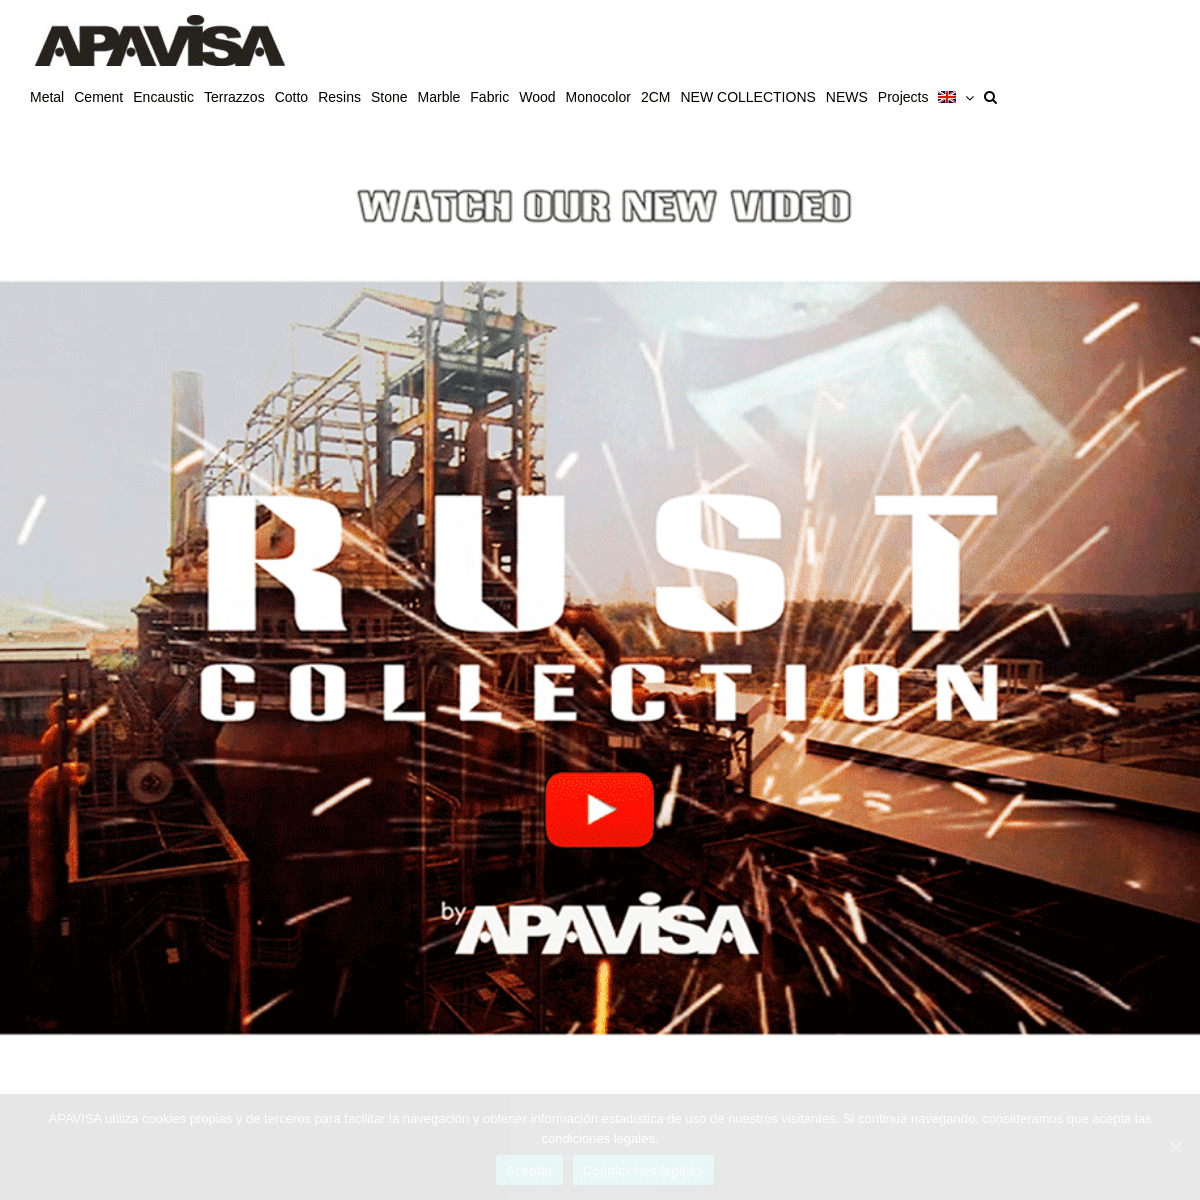 A complete backup of apavisa.com